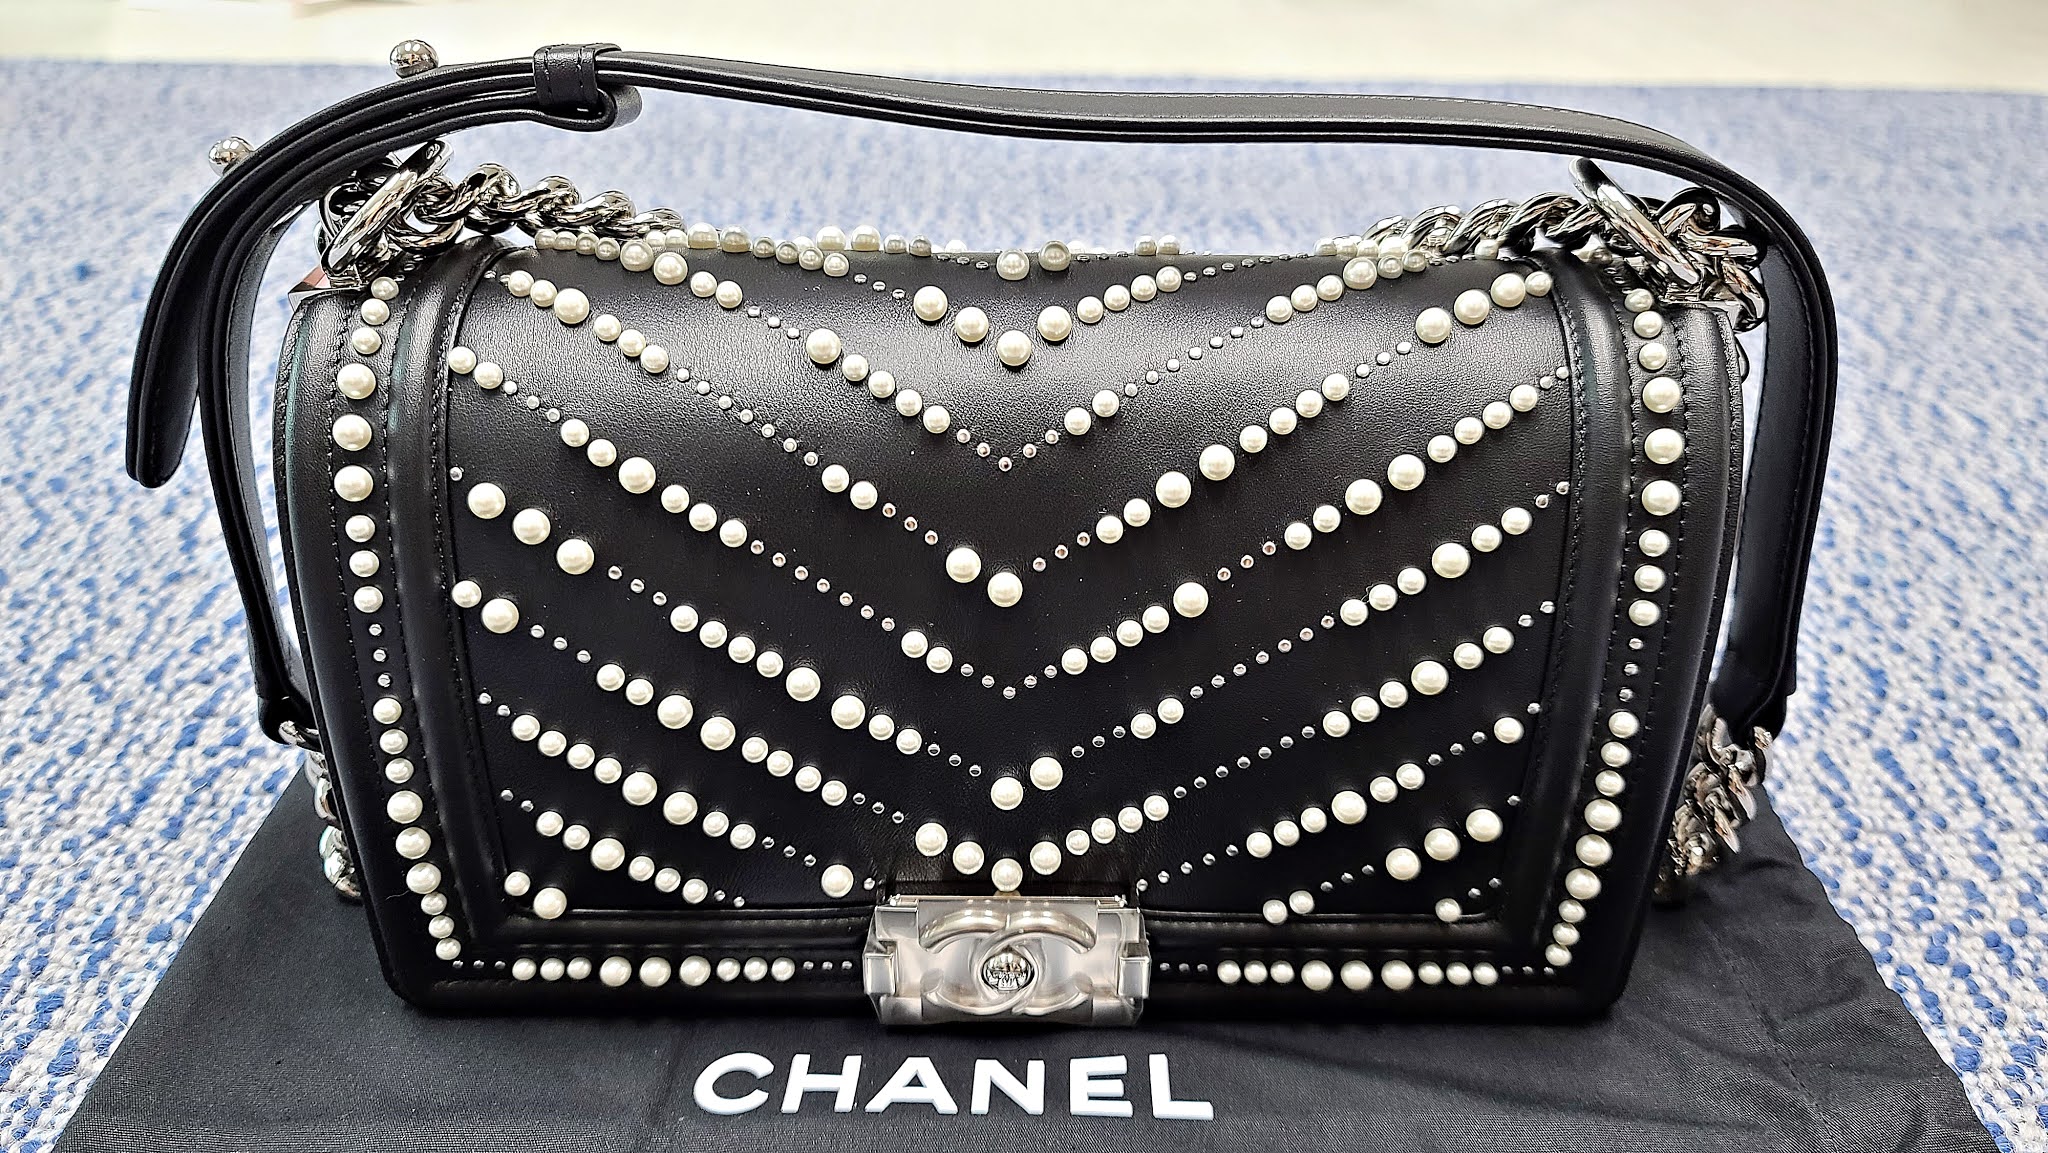 Chanel Cruise 2015 Seasonal Bag Collection